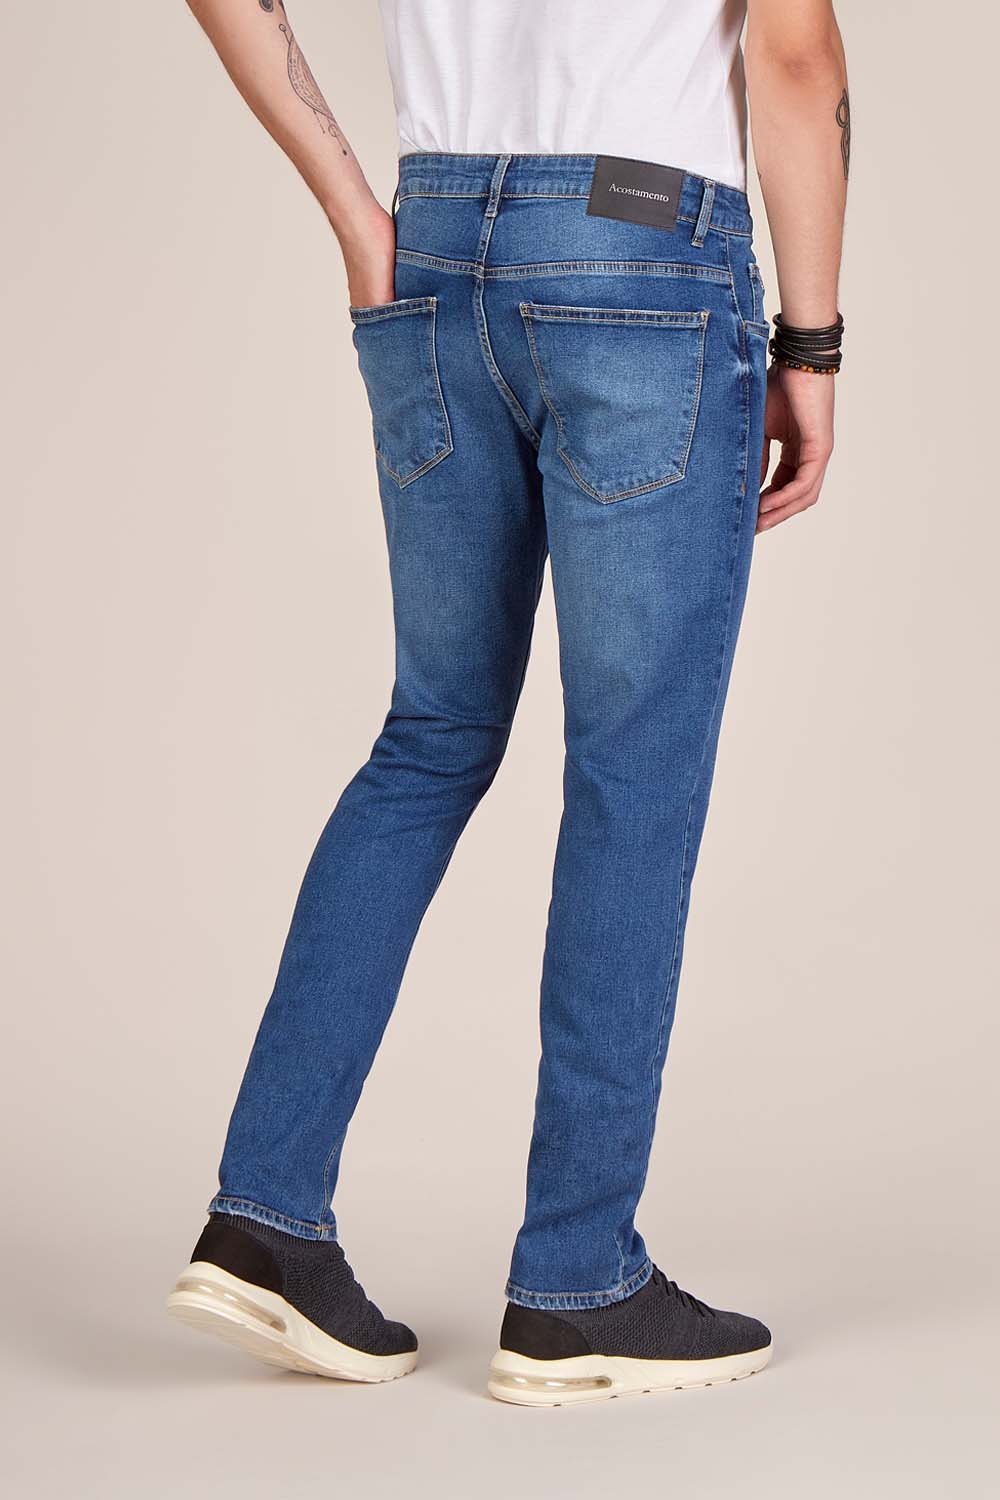 Calça Jeans Masculina Básica Versátil Acostamento